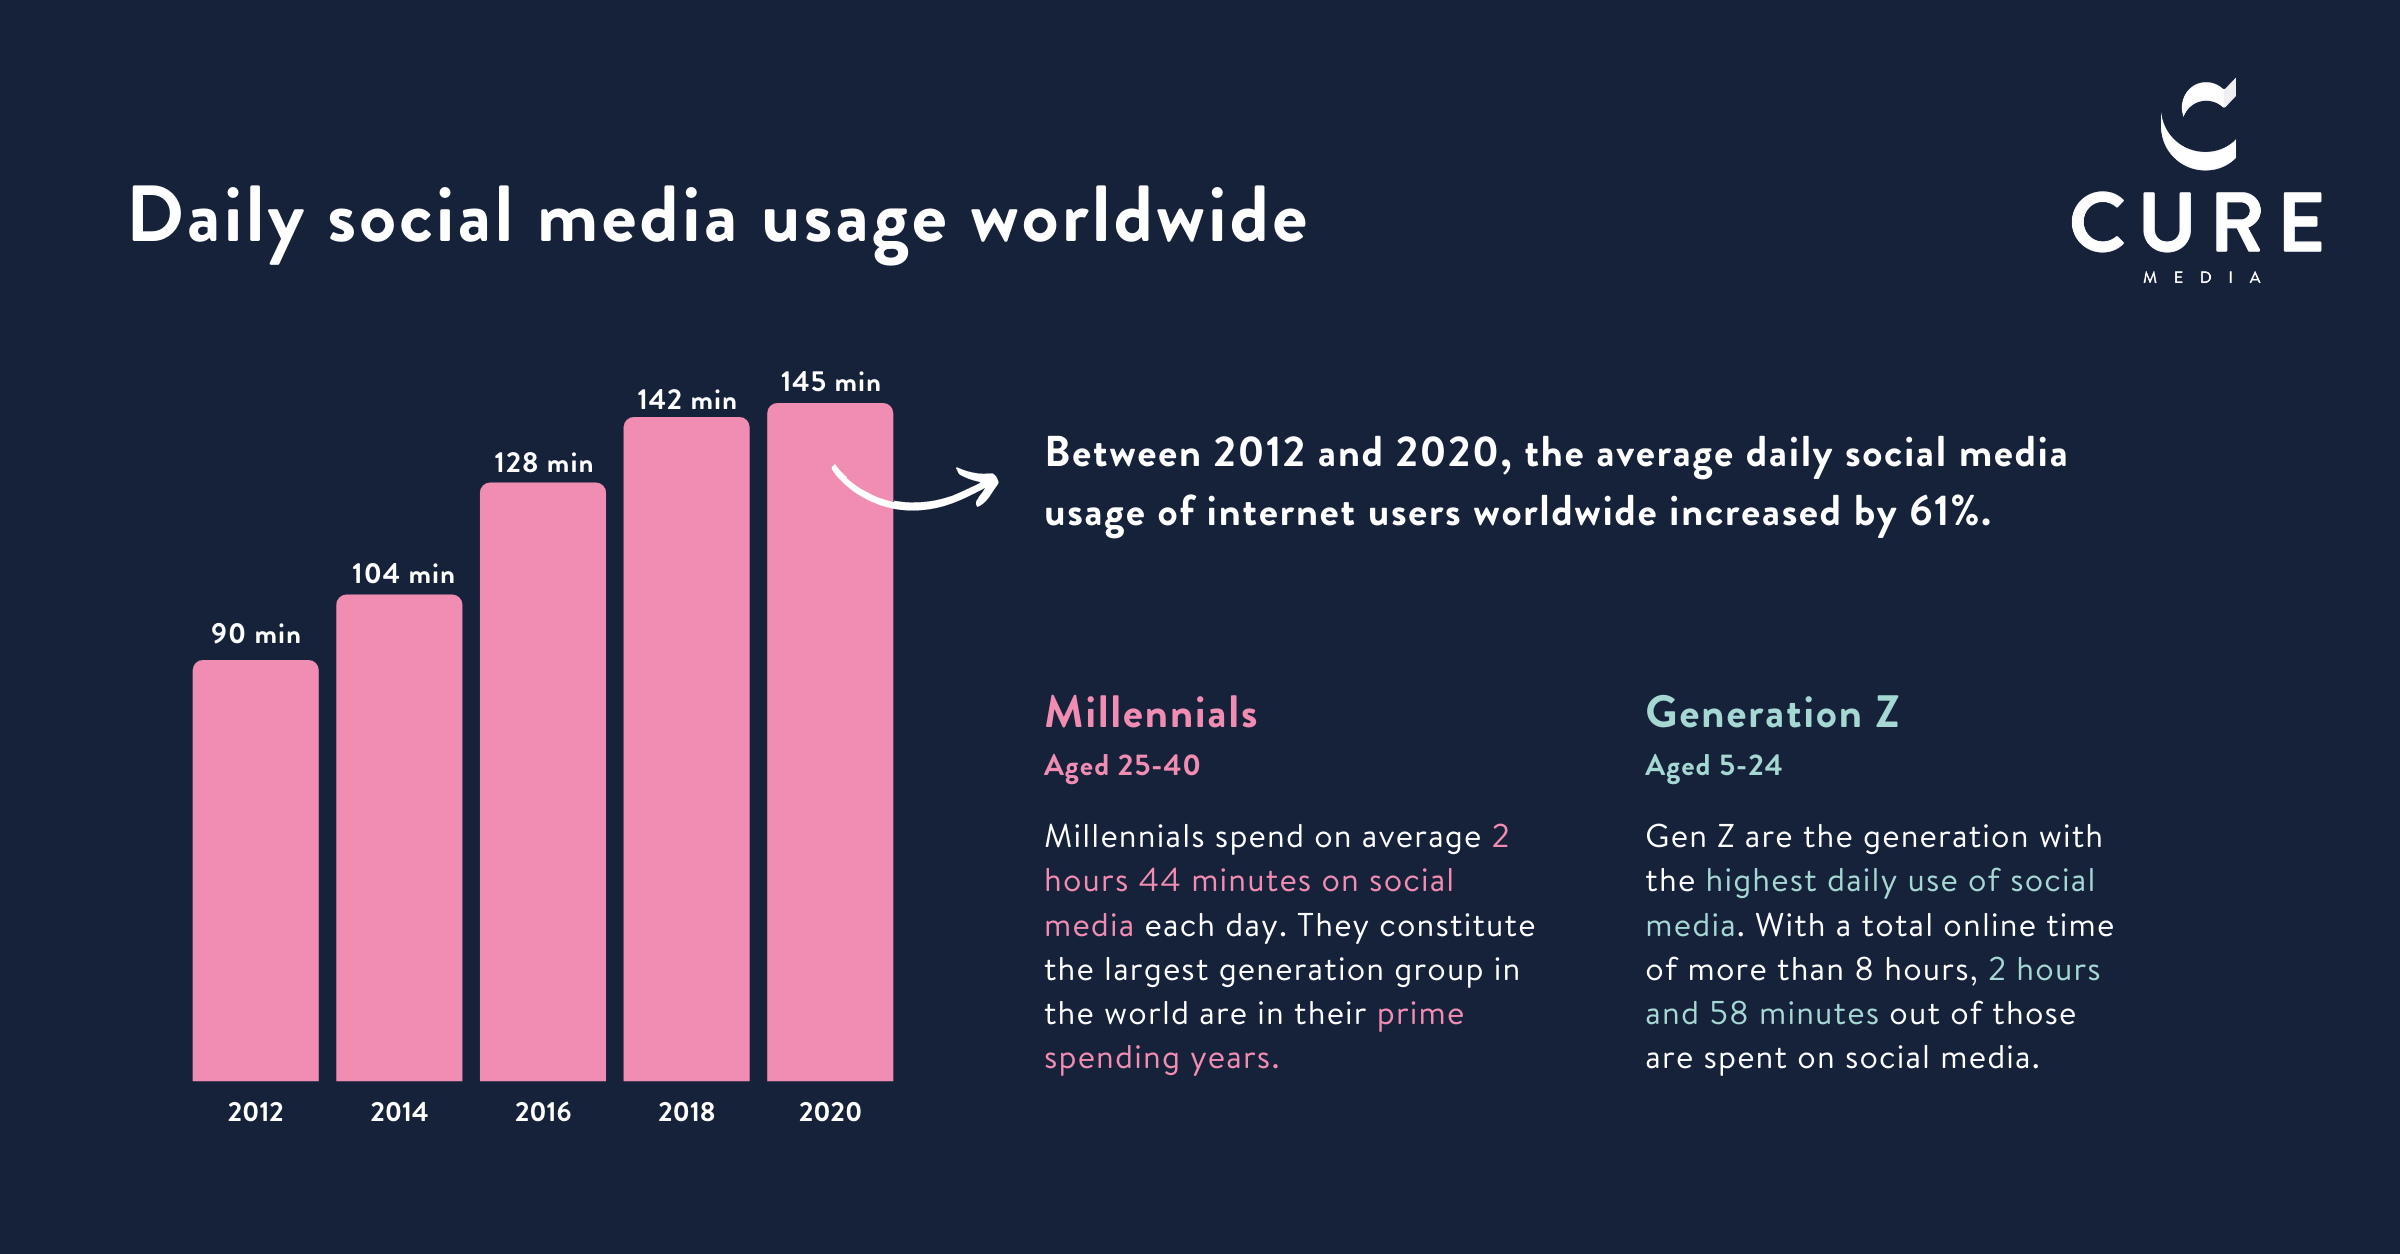 Social media usage worldwide